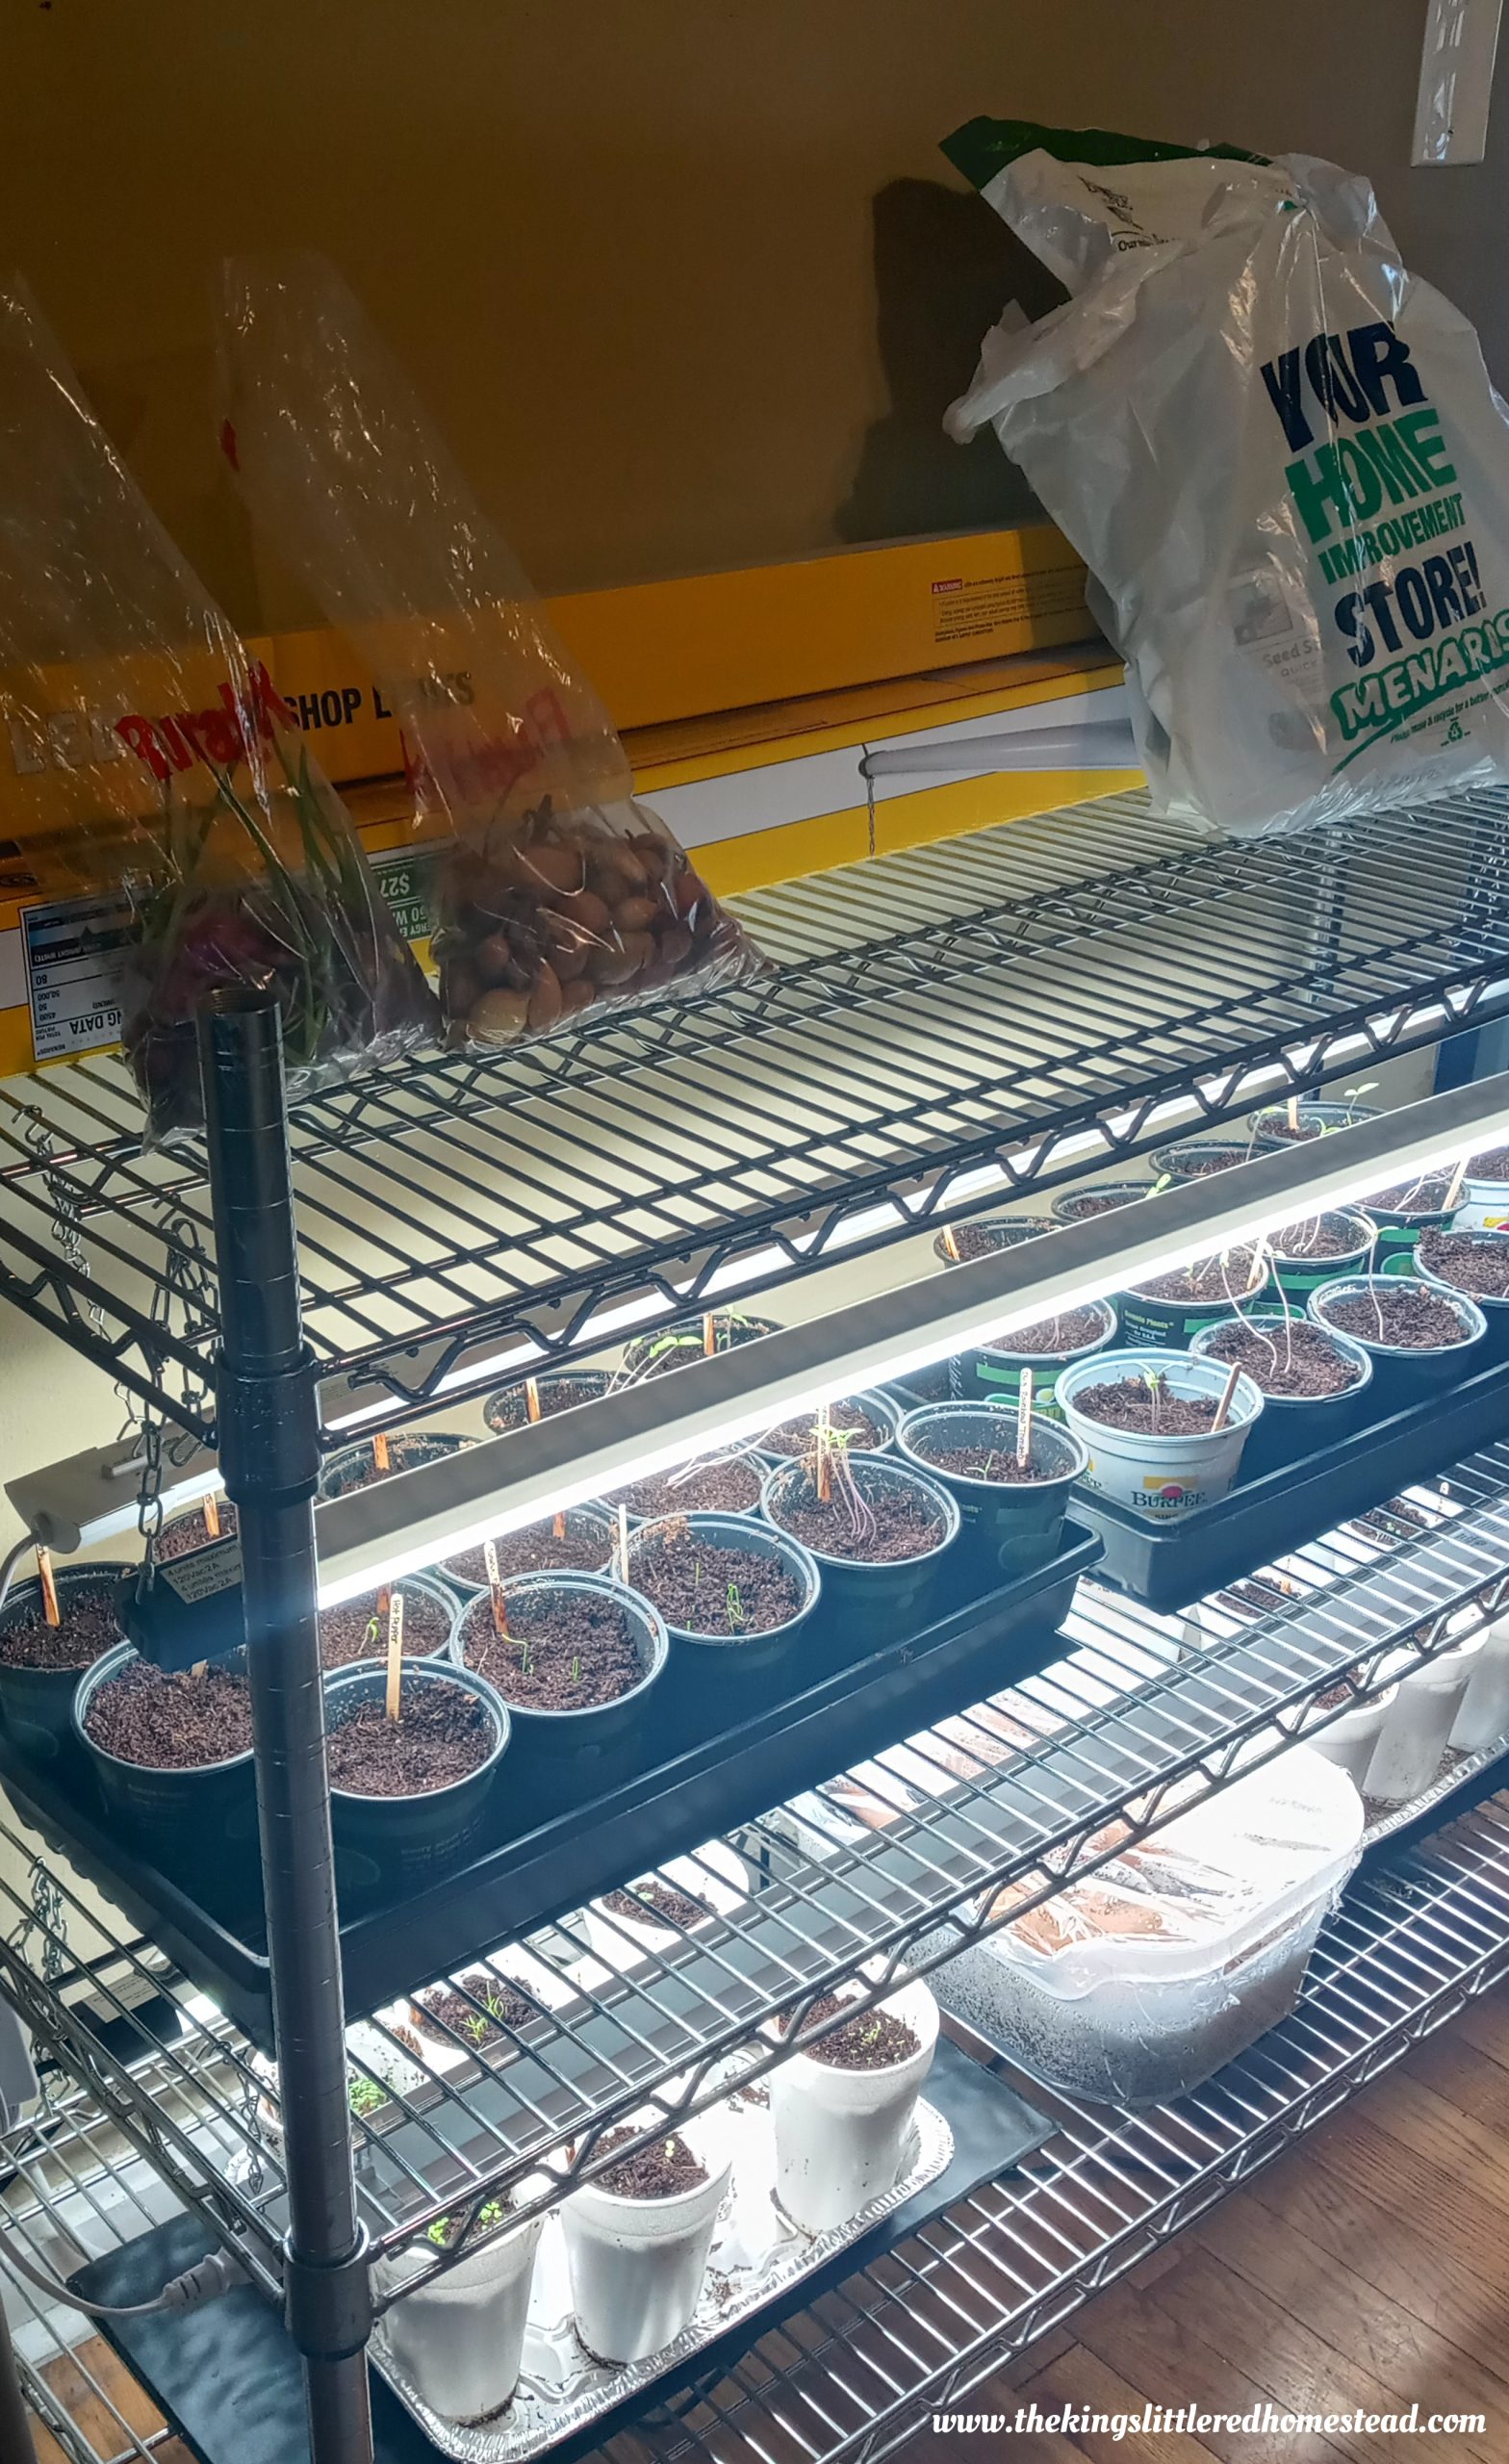 Success starting seeds indoors